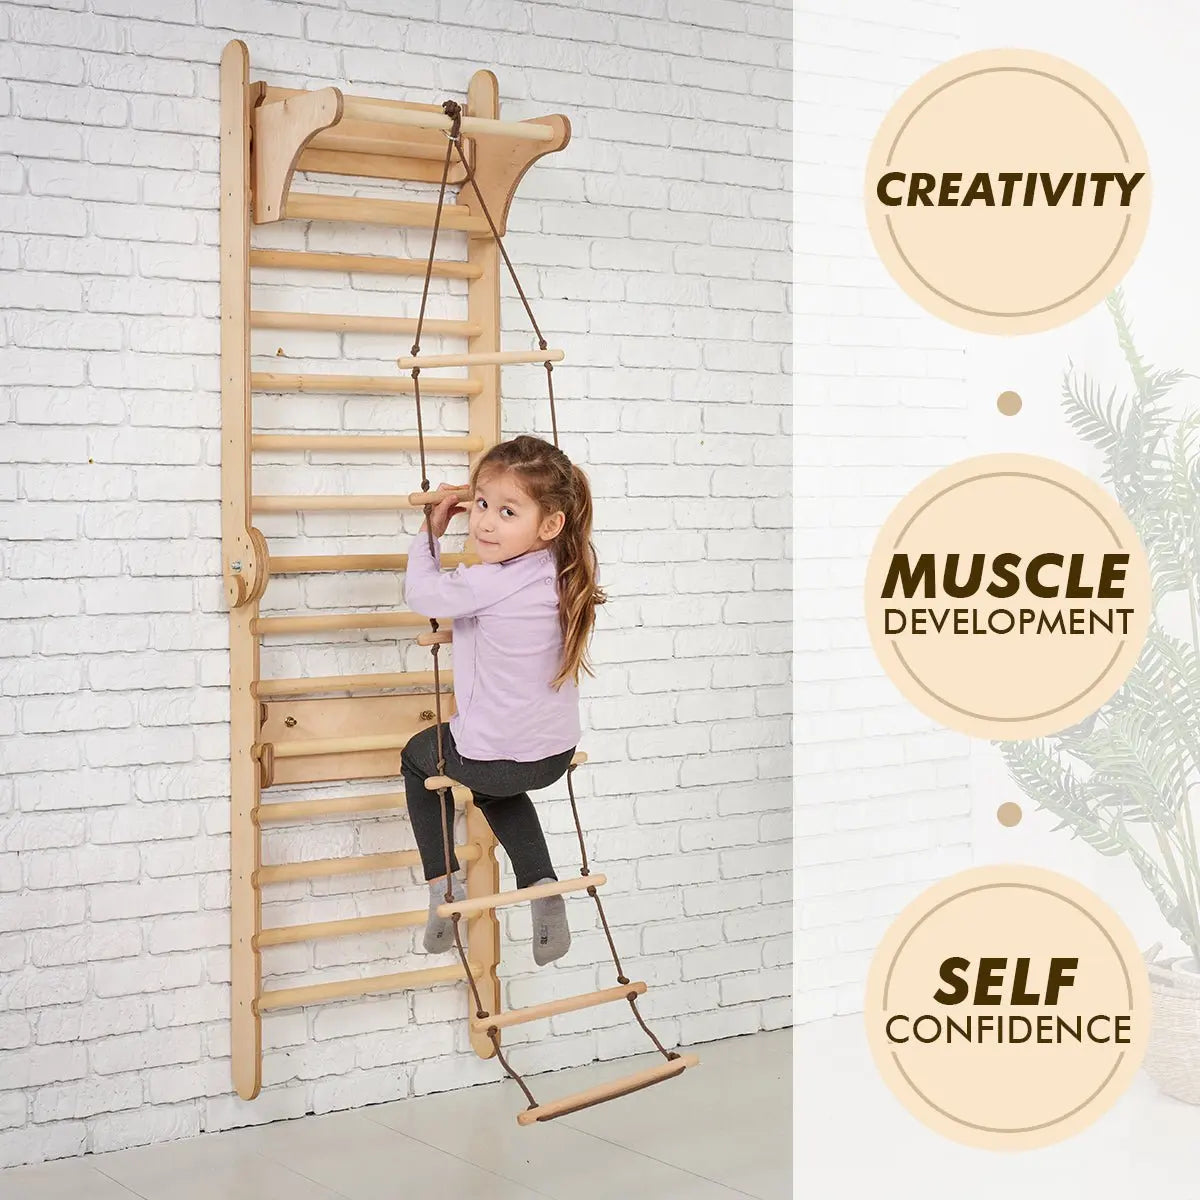 3in1 Wooden Swedish Wall / Climbing ladder for Children + Swing Set + Slide Board